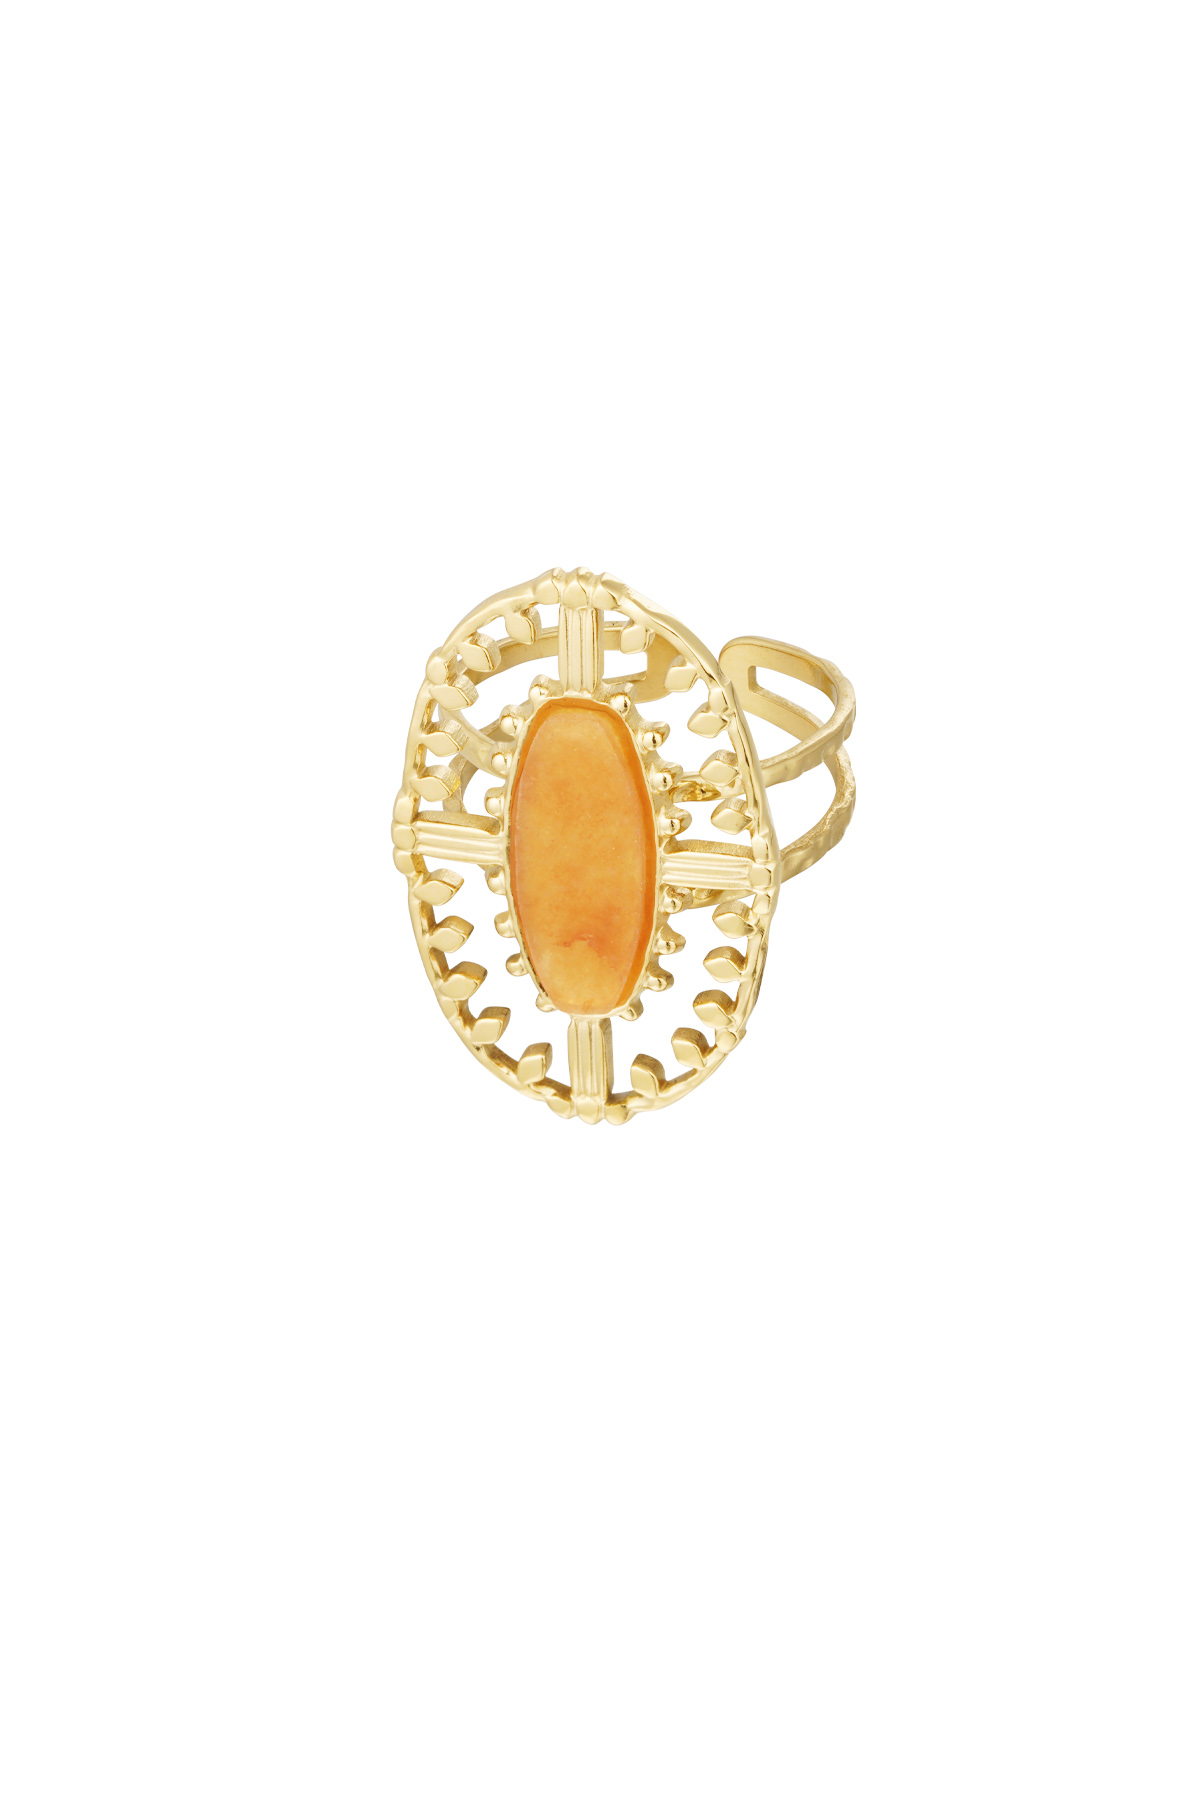 Anello vintage oblungo con pietra - oro/arancio h5 